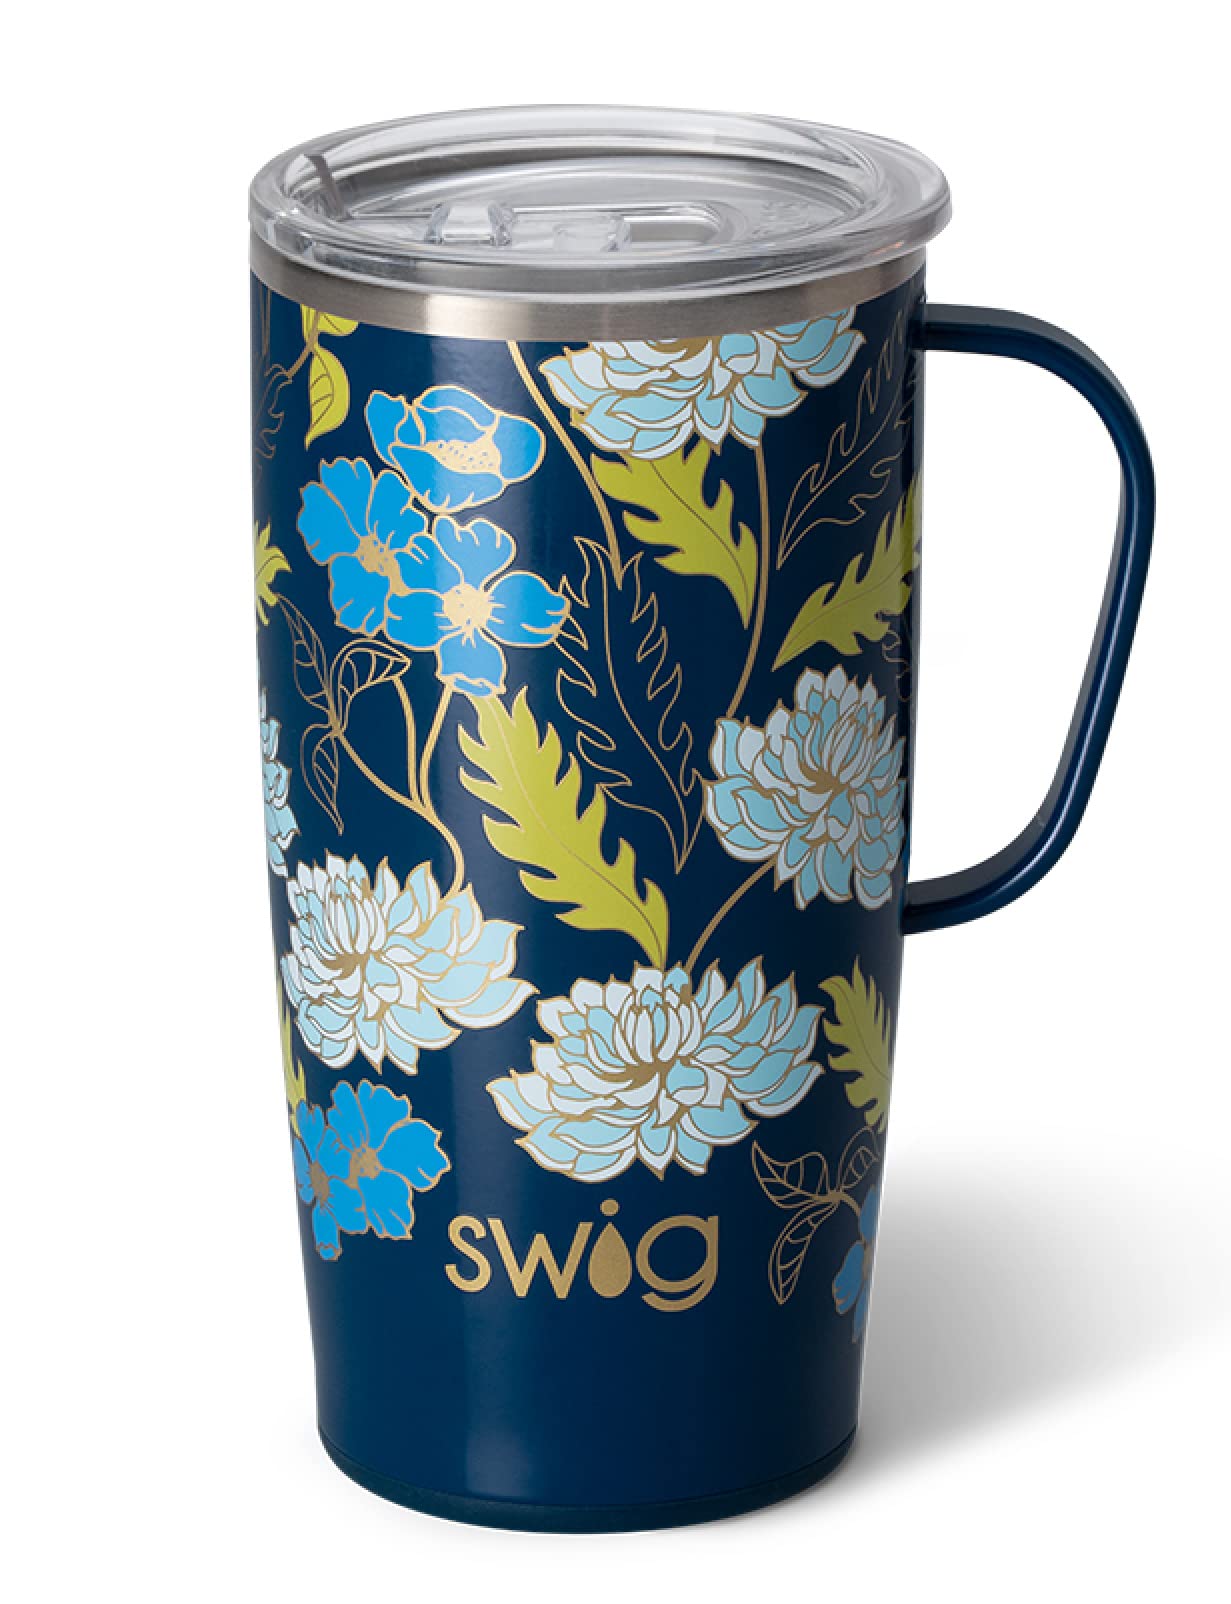 Swig Life - Pink Lemonade Travel Mug (22oz) – We Fill Good